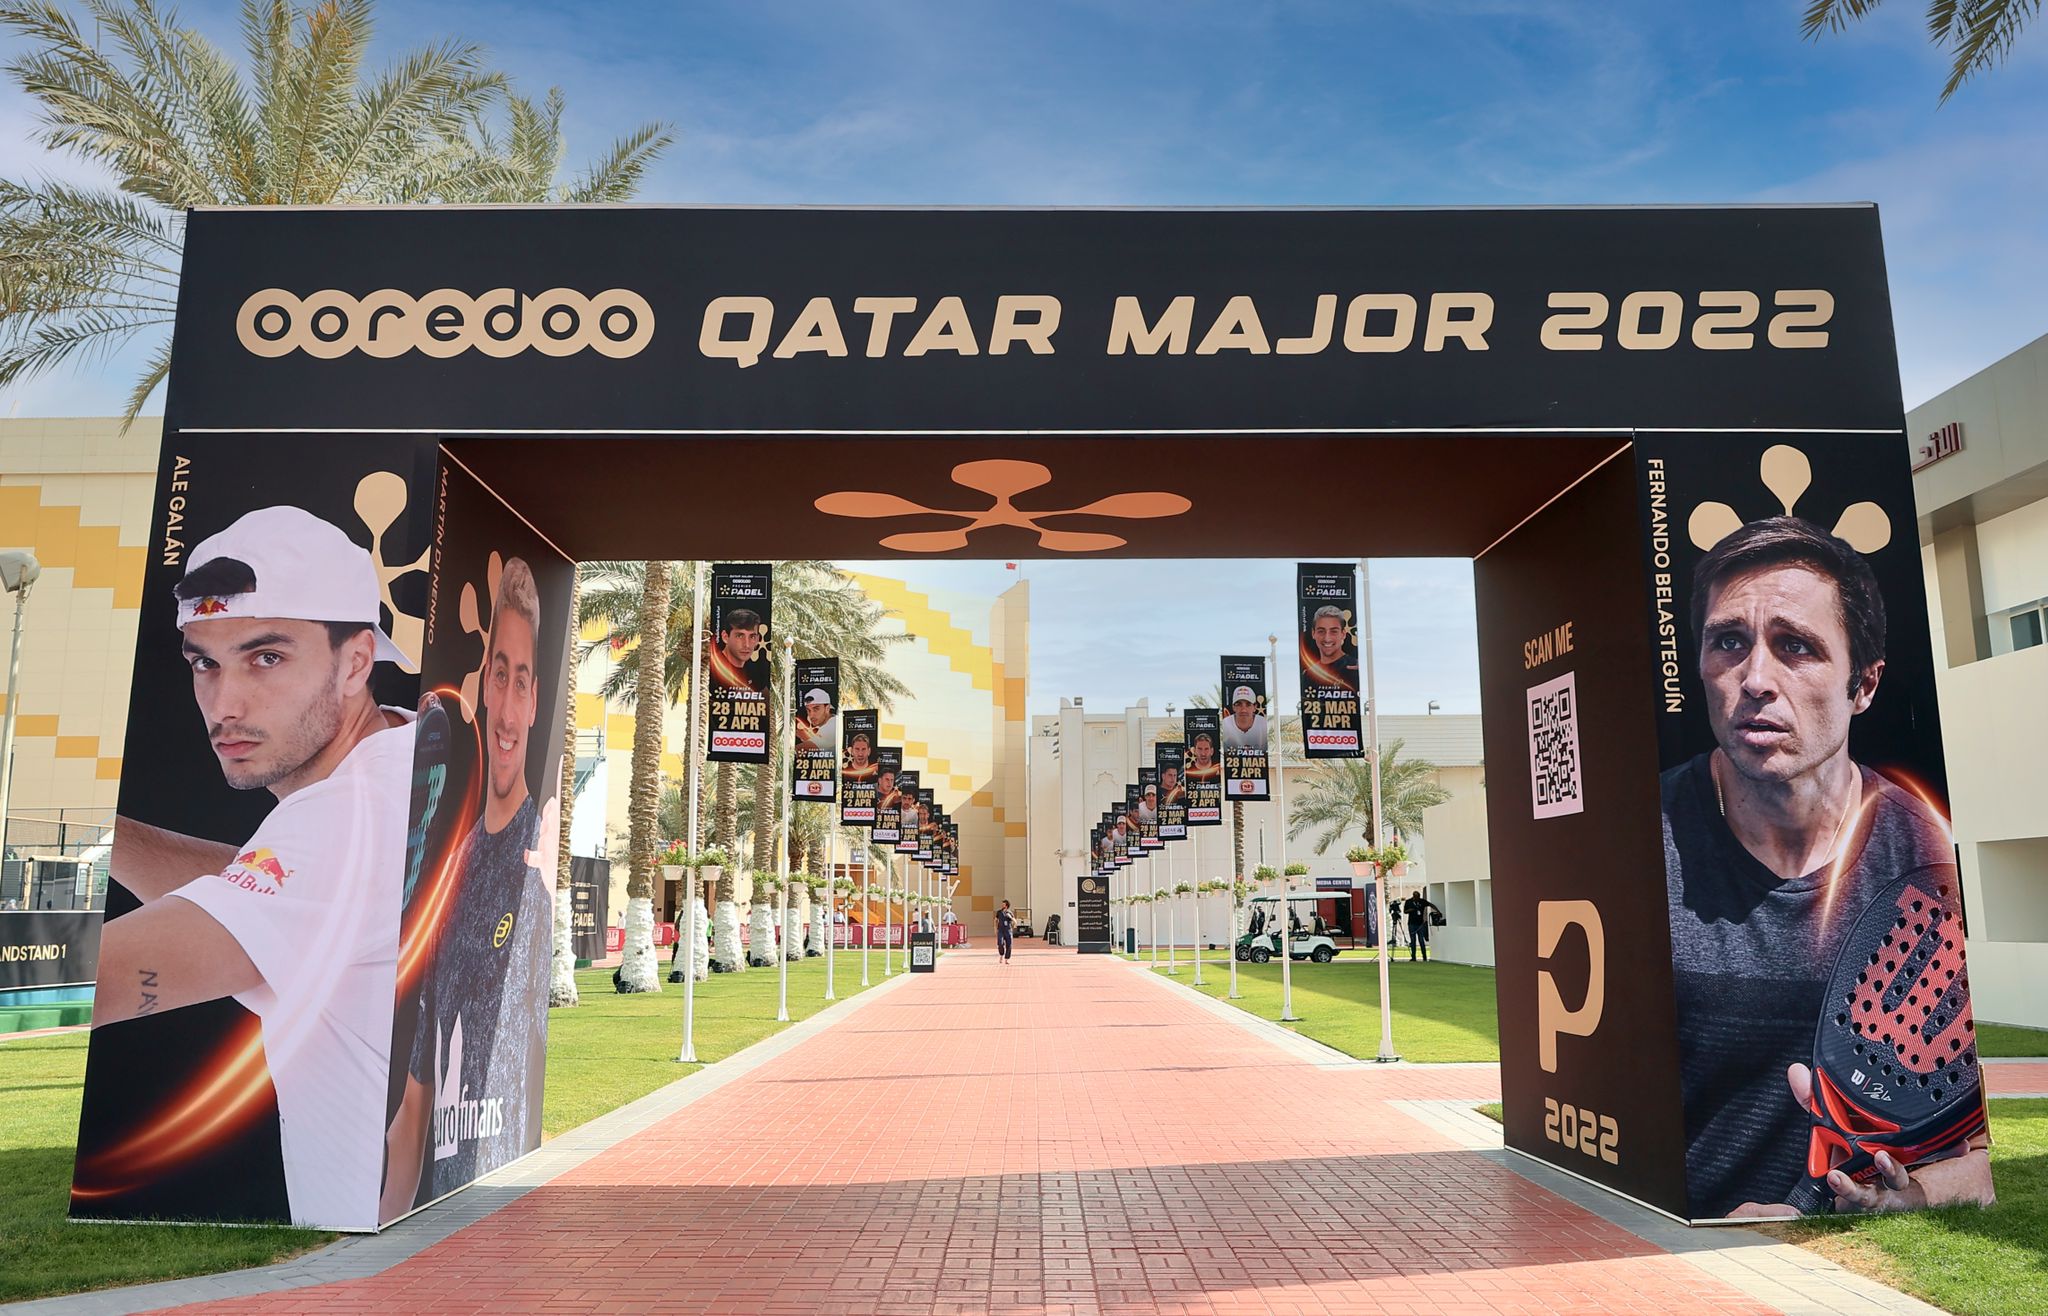 Indgang til Khalifa Doha Qatar Major 2022